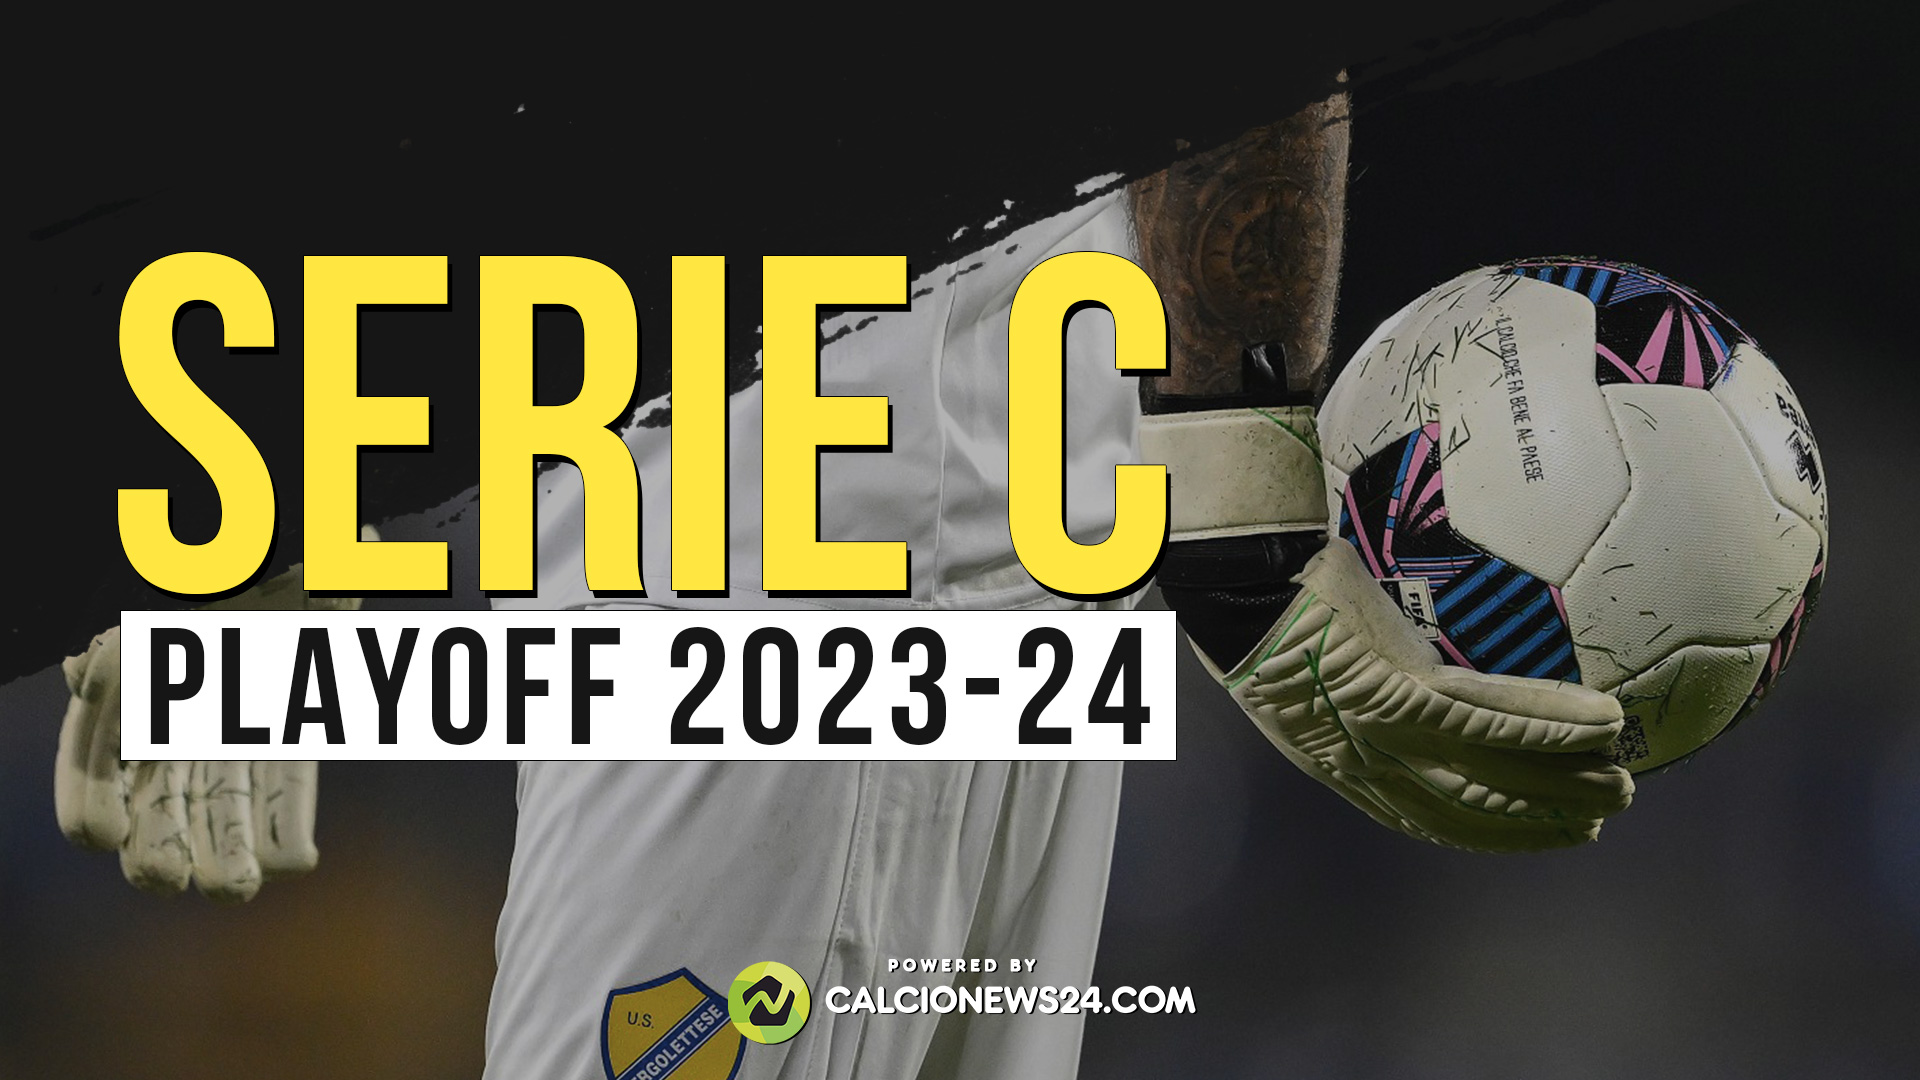 Playoff Serie C 2023/2024: regolamento, date, tabellone, risultati